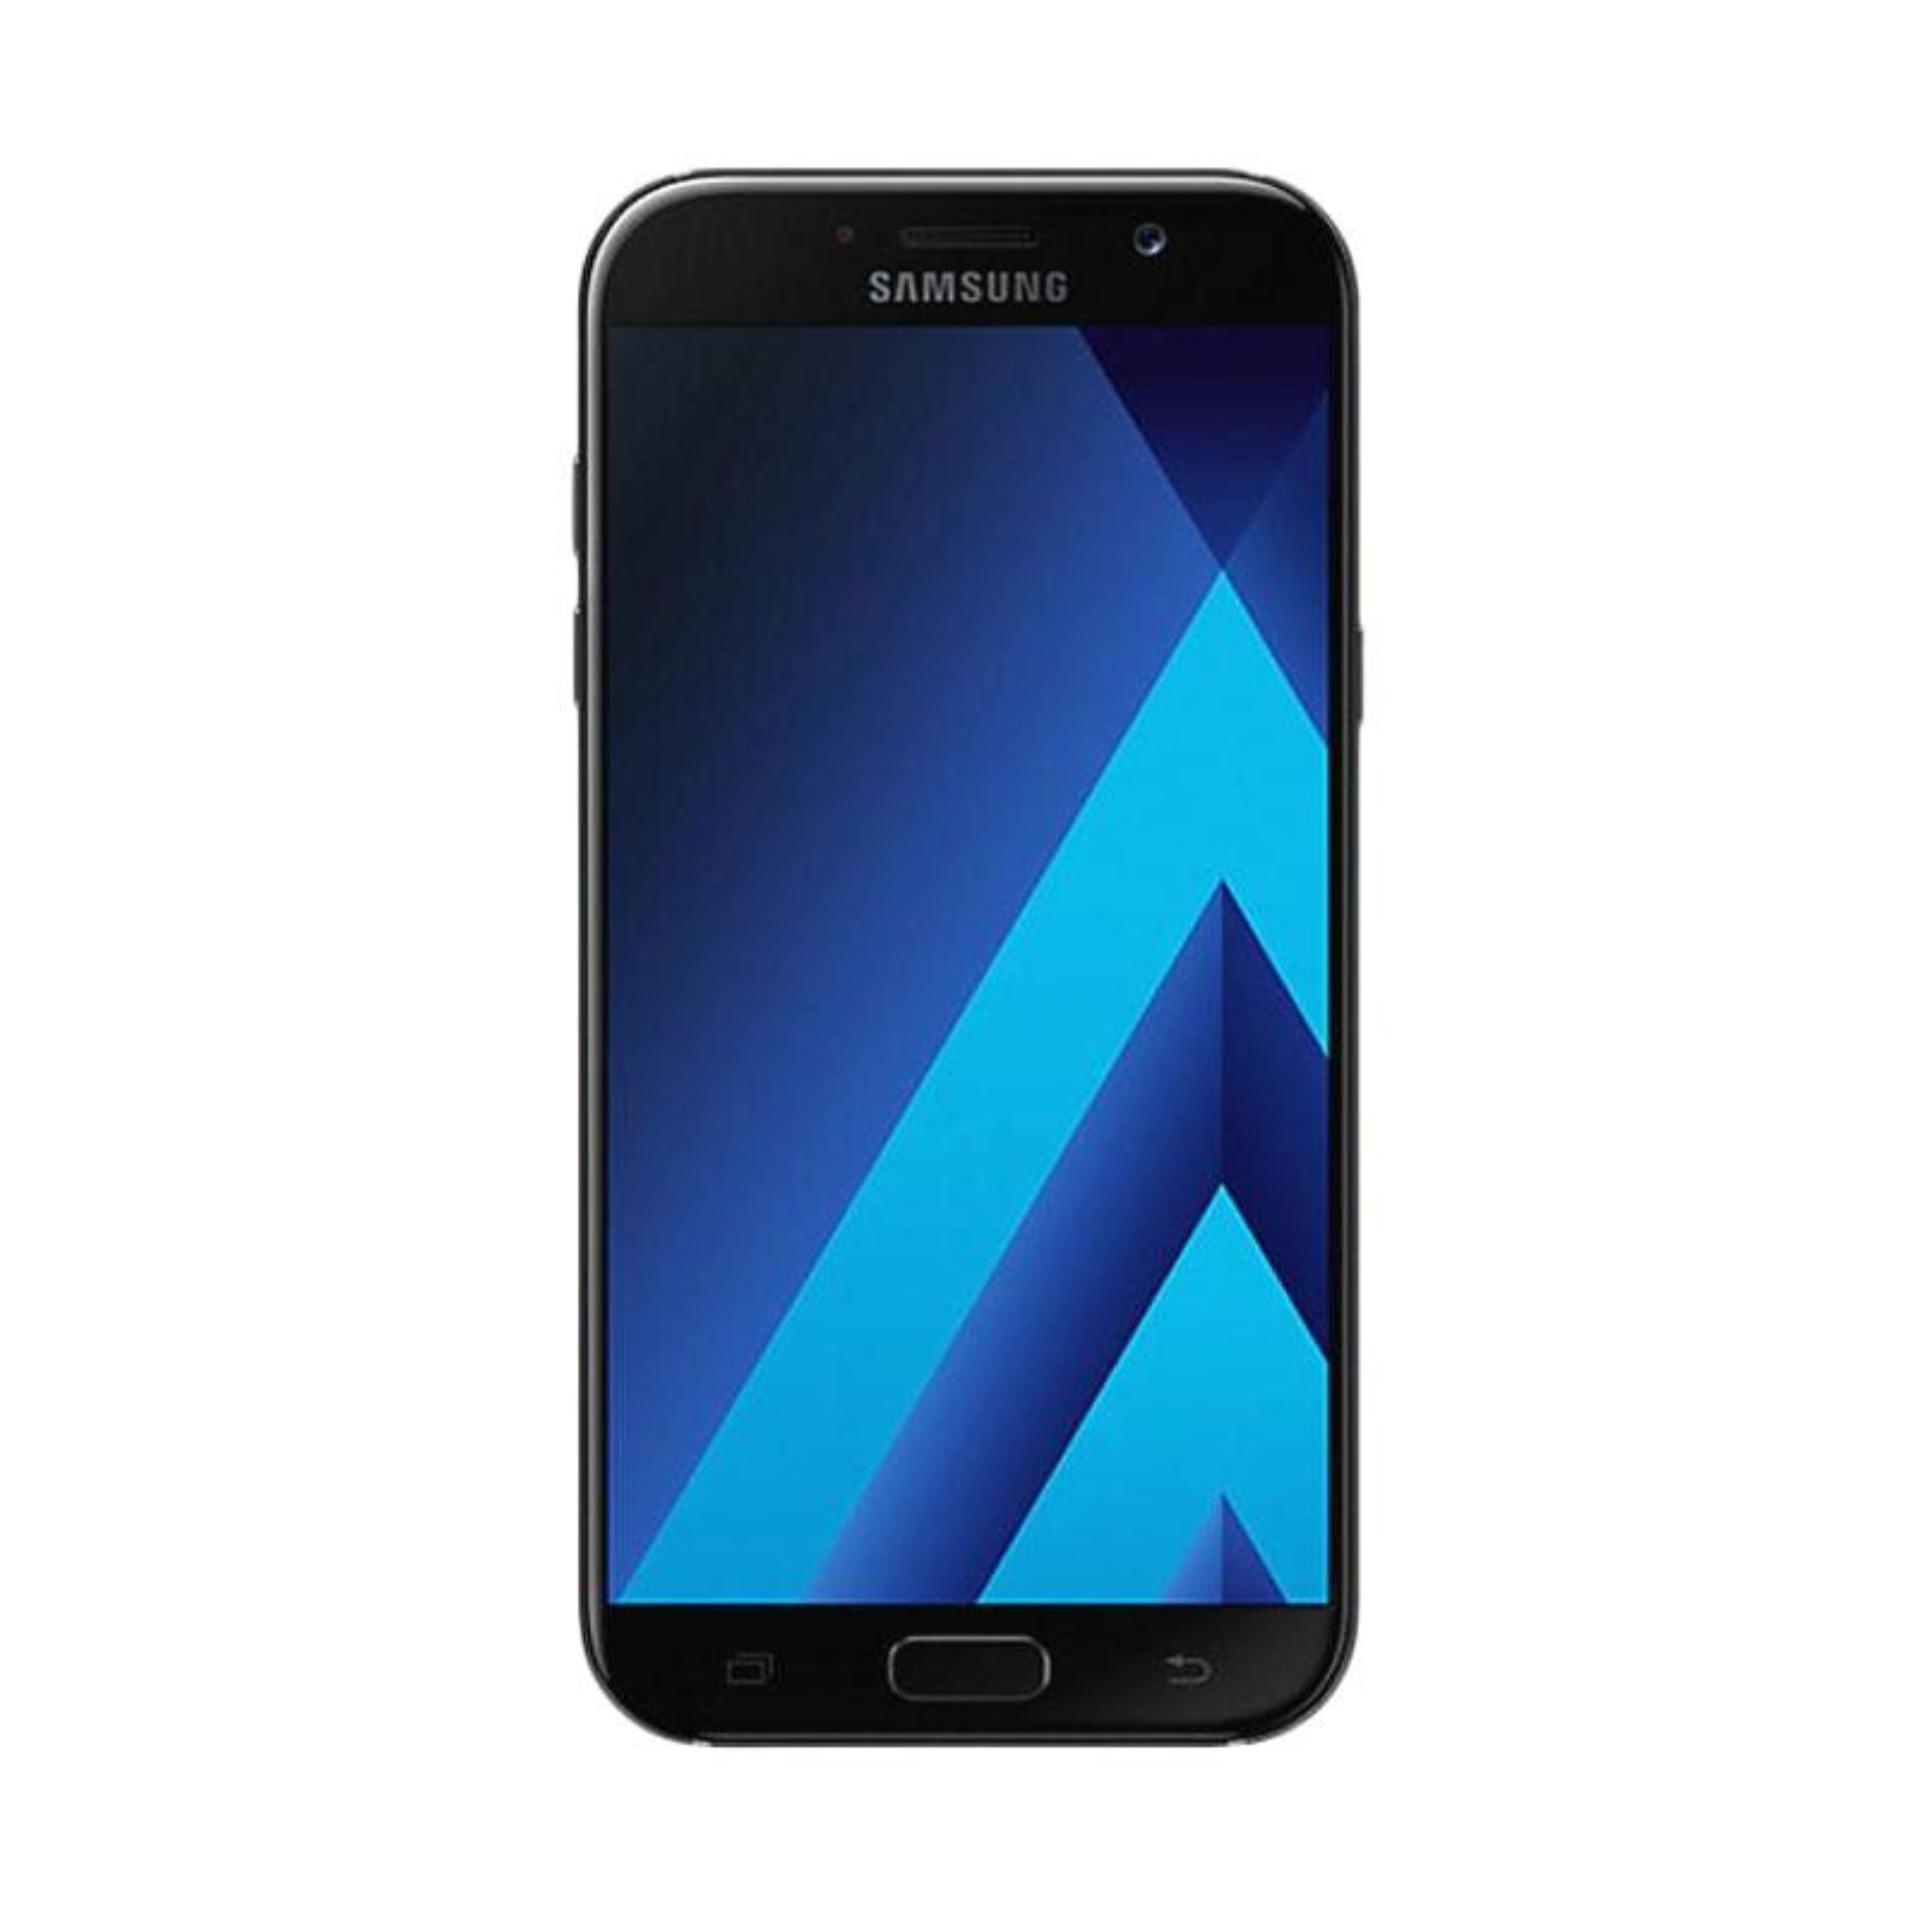  Samsung Galaxy A7 2017 SM-A720 Smartphone - Black